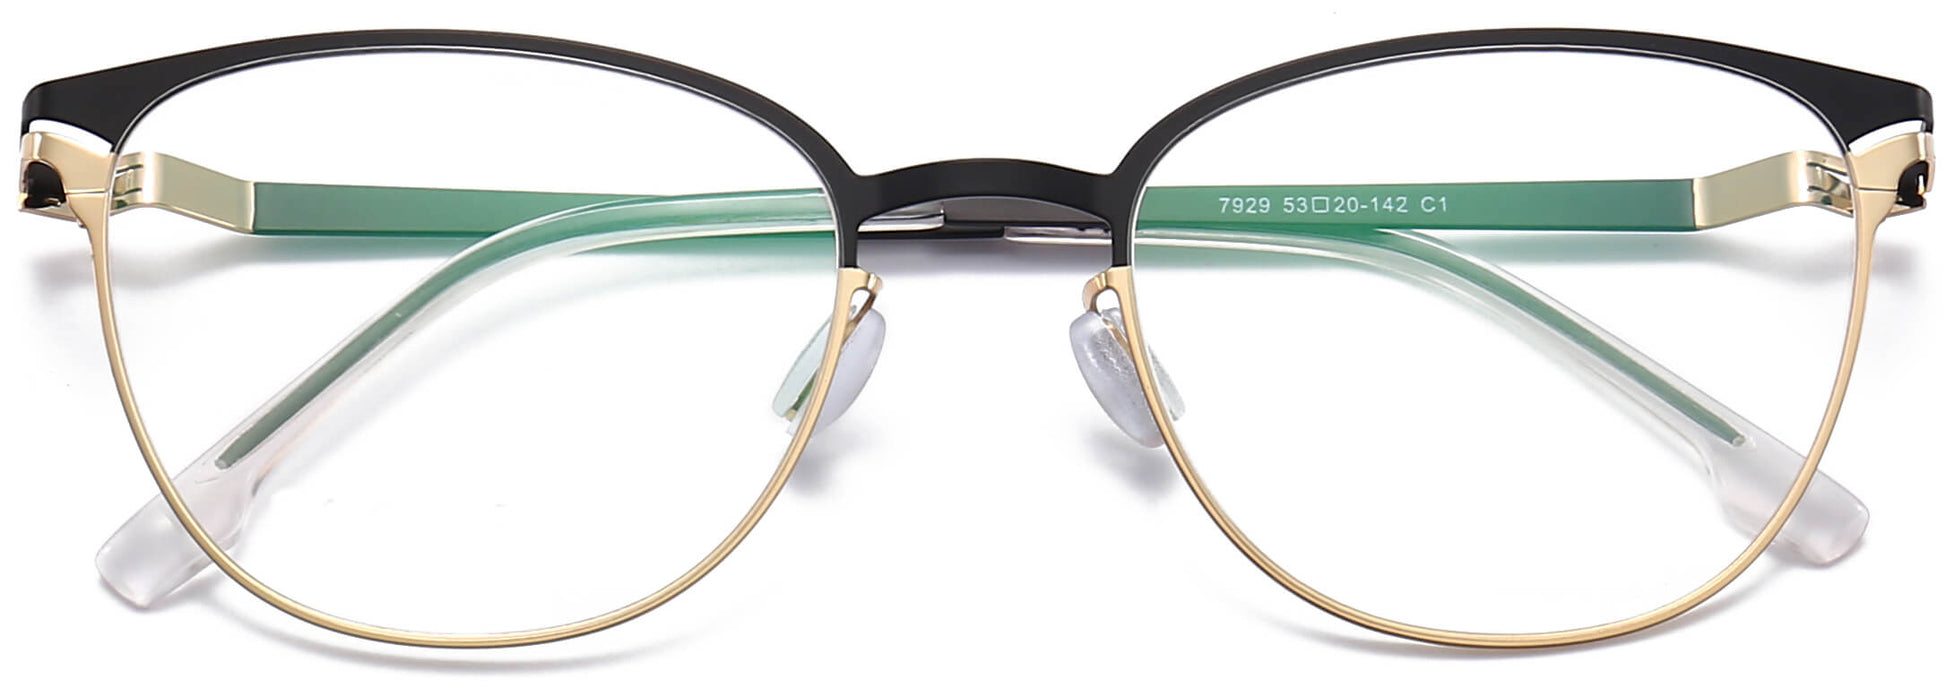 Waverly Cateye Black Eyeglasses from ANRRI, closed view